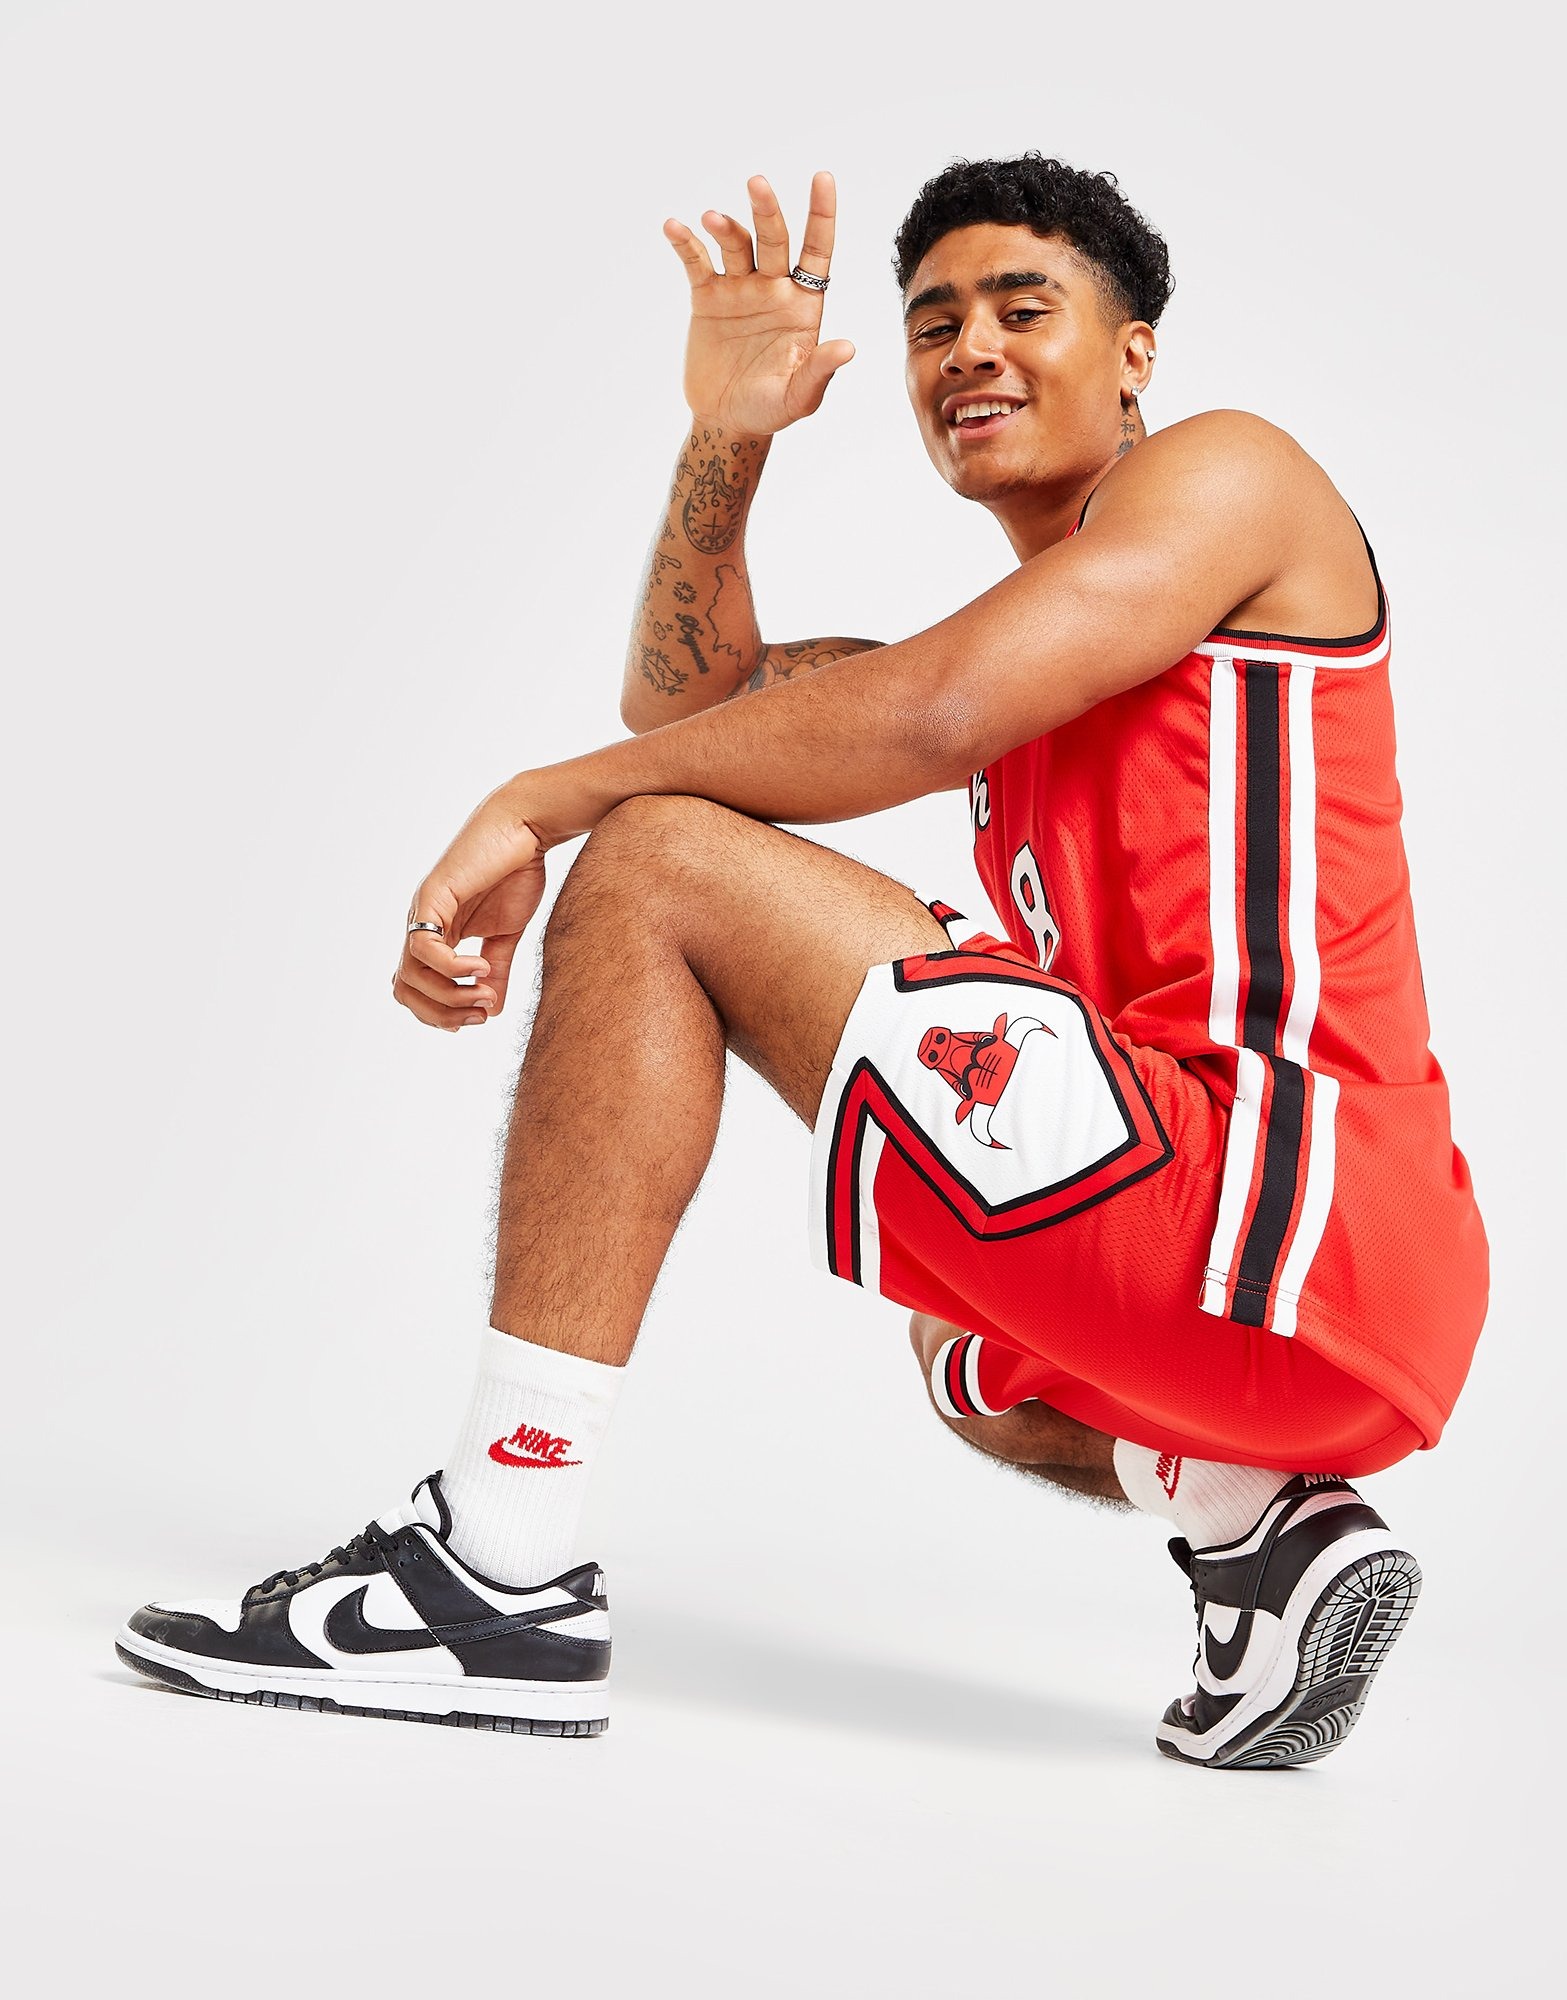 Nike Chicago Bulls Association Edition Shorts